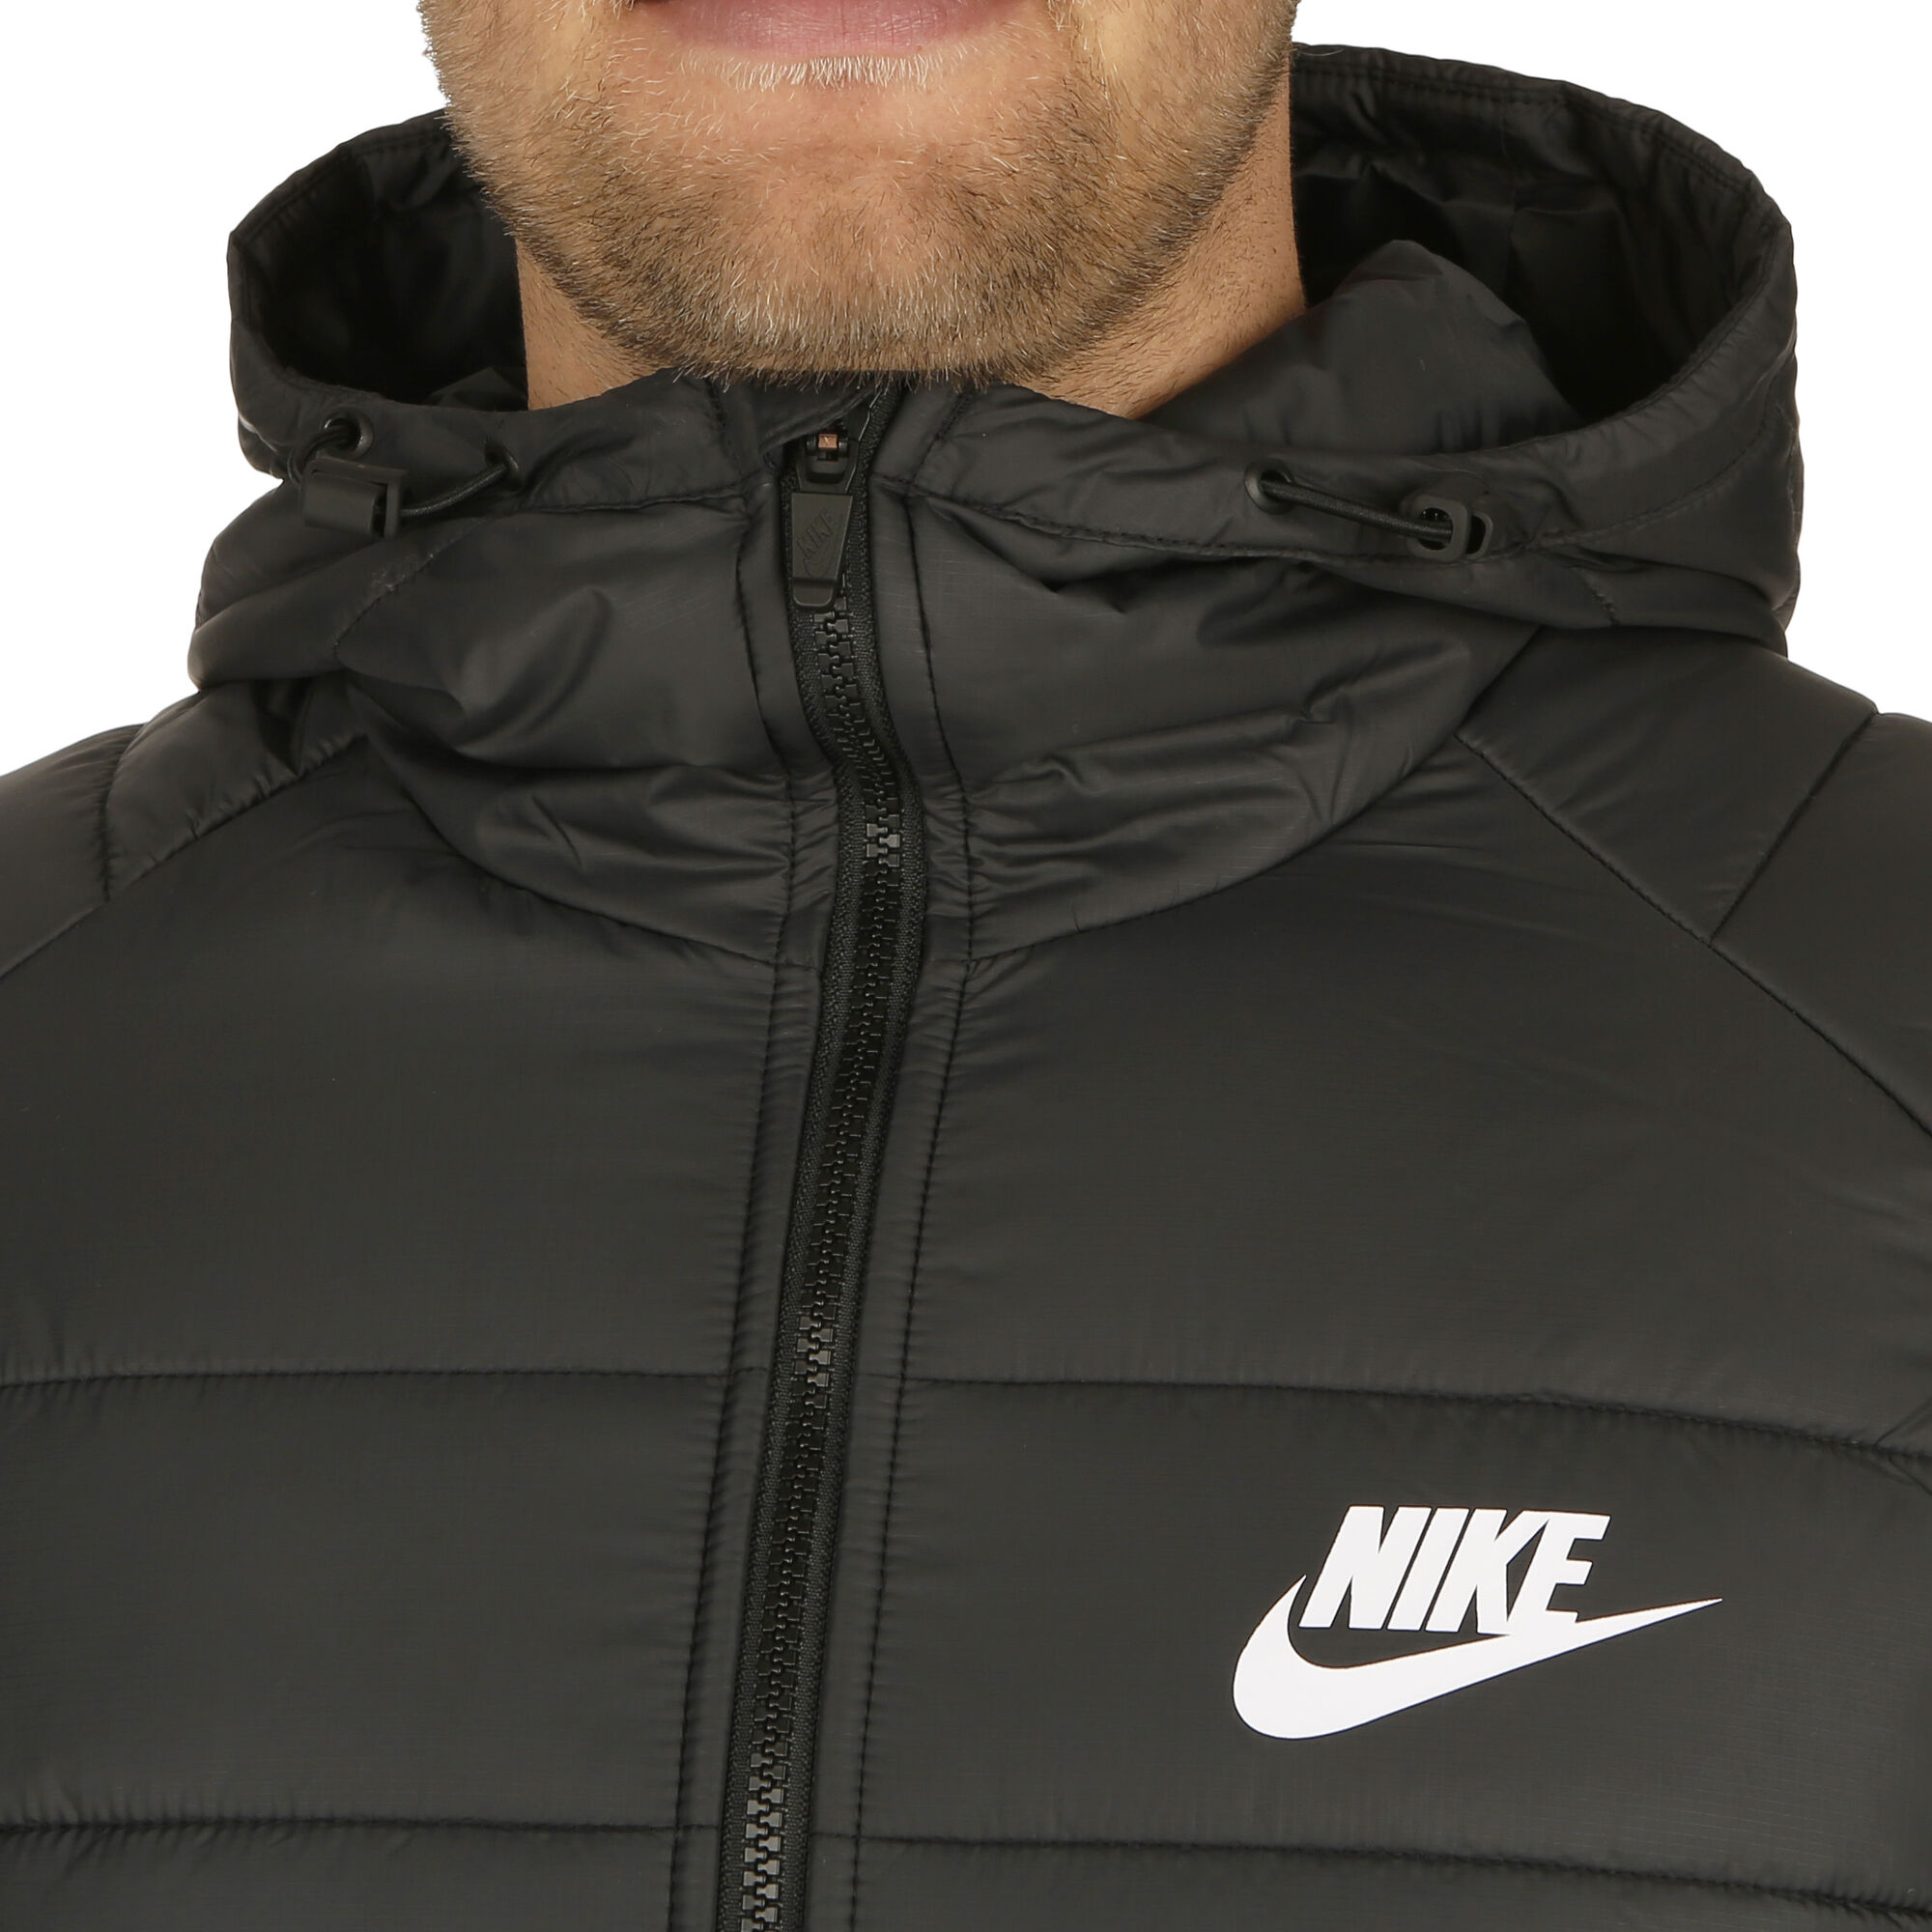 opstelling weefgetouw Trouw buy Nike Advance 15 Training Jacket Men - Black, Grey online | Tennis-Point